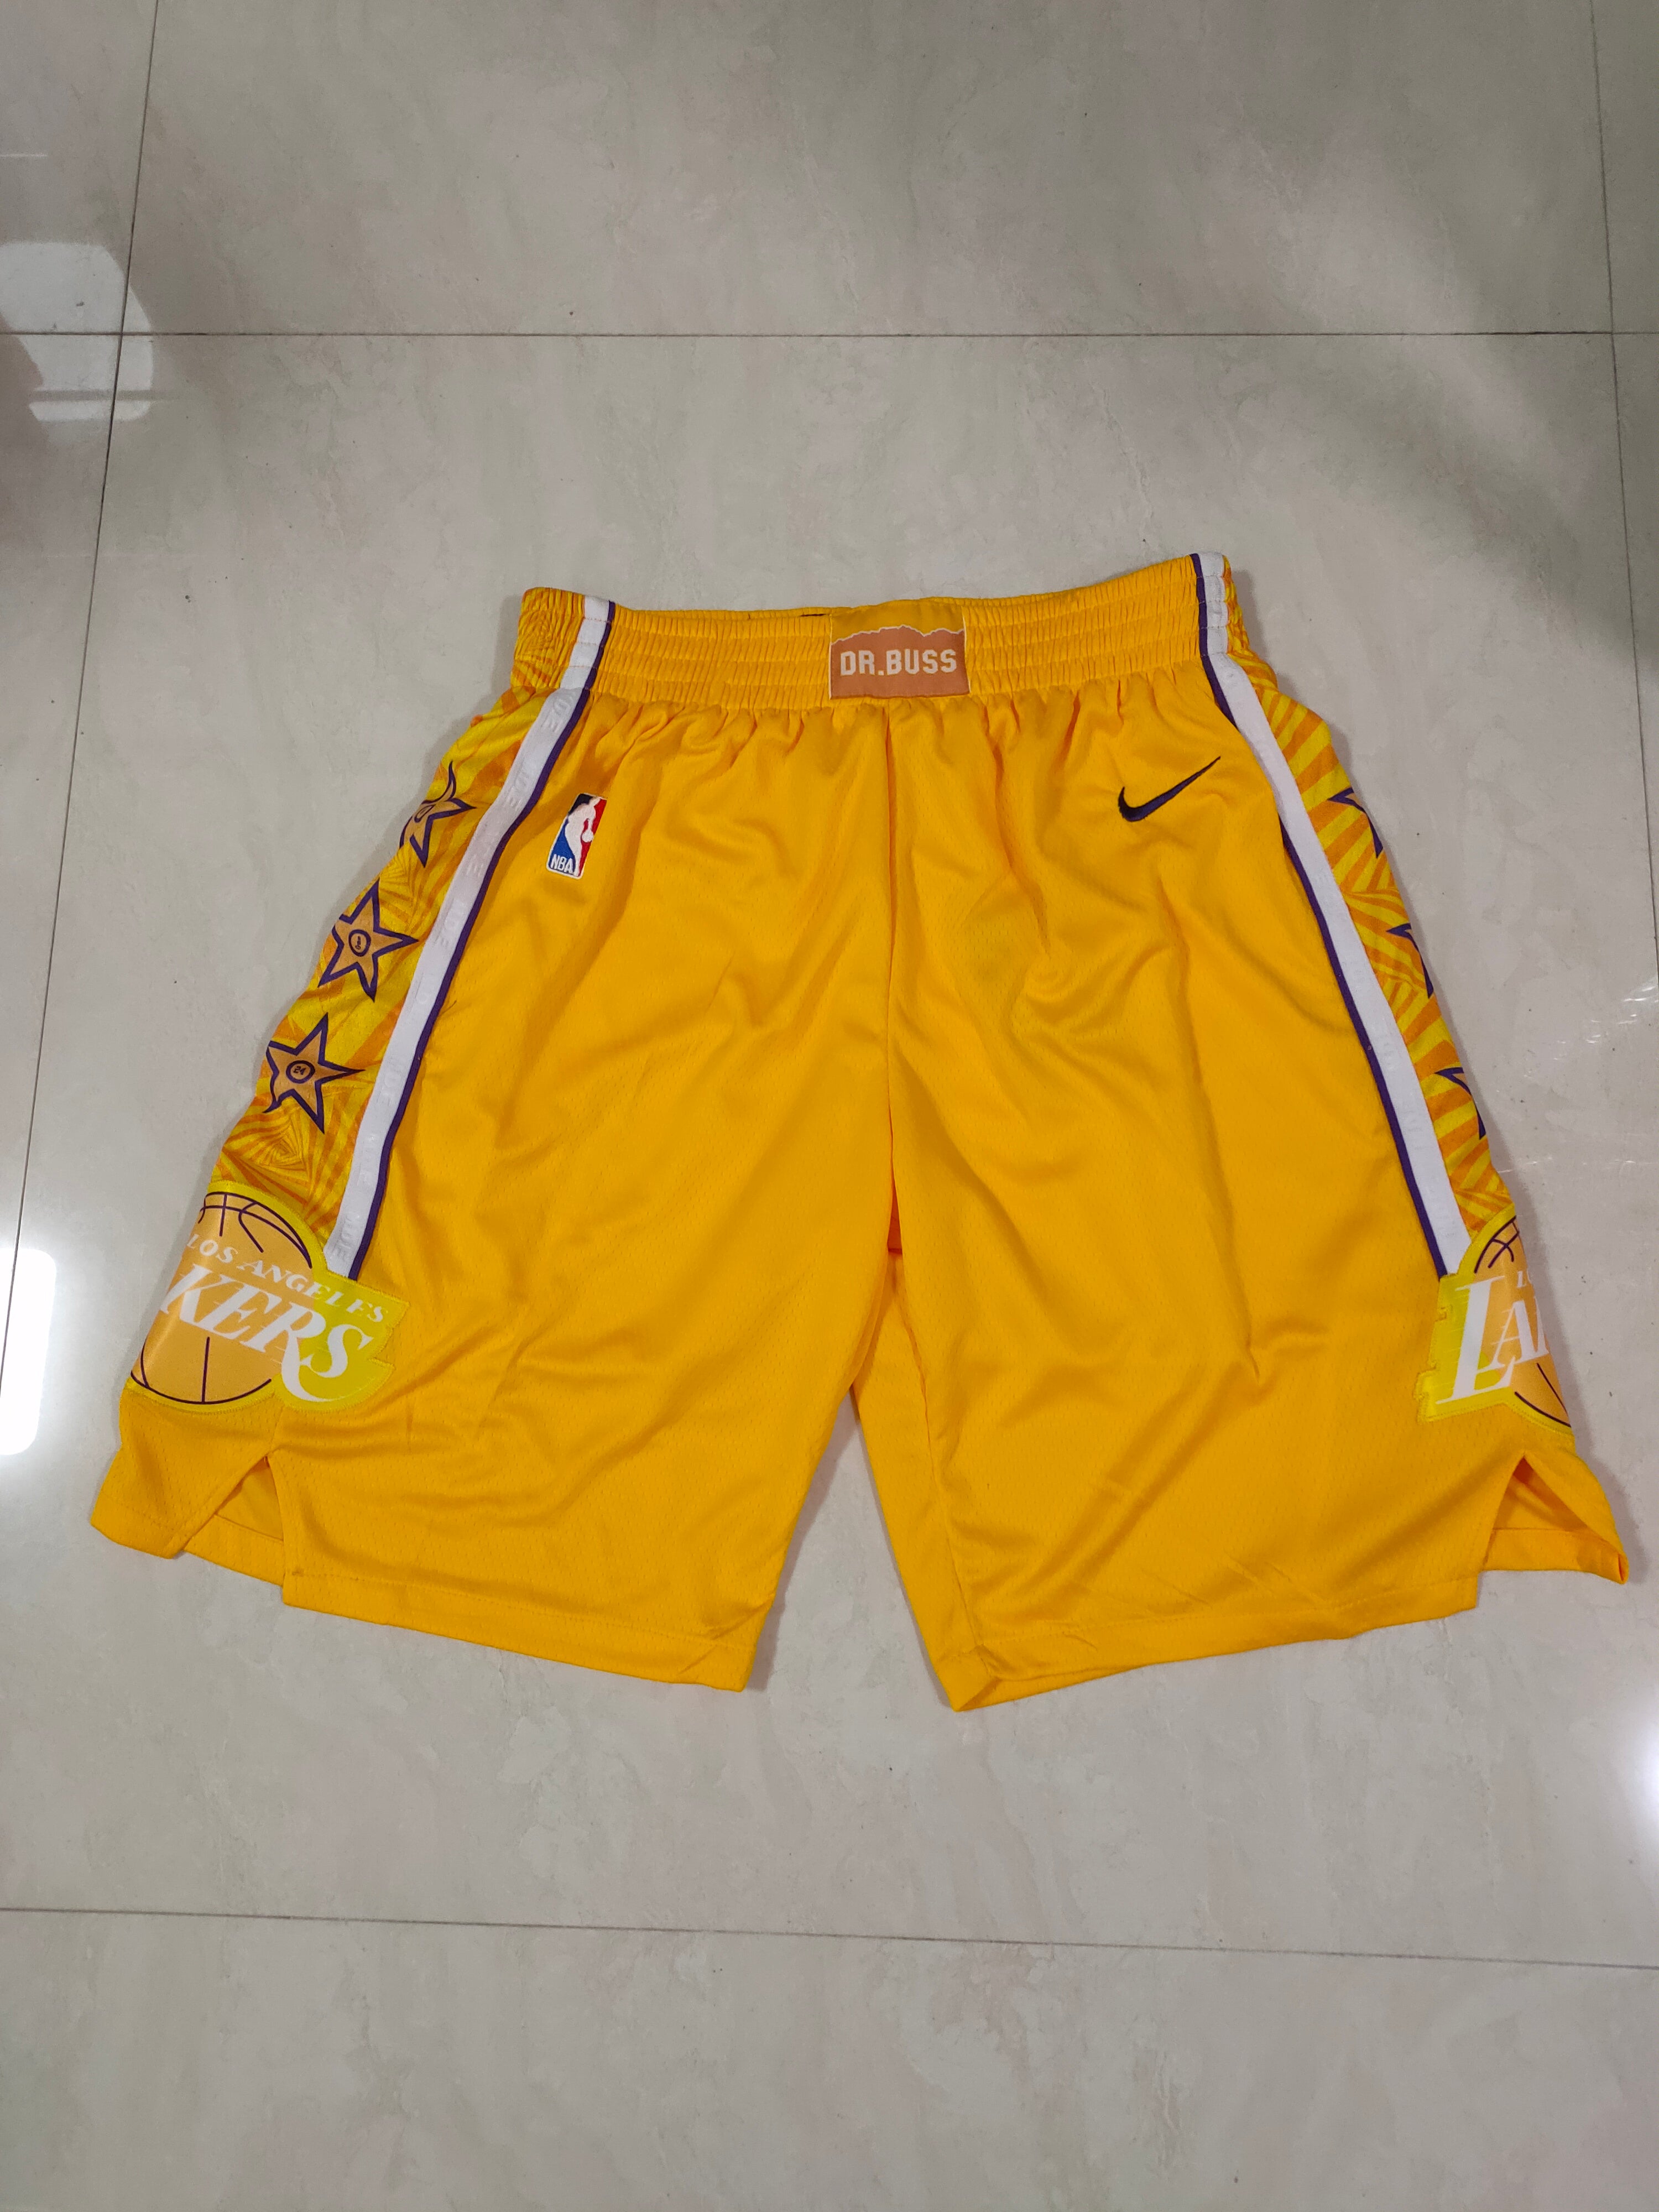 Lakers full yellow shorts